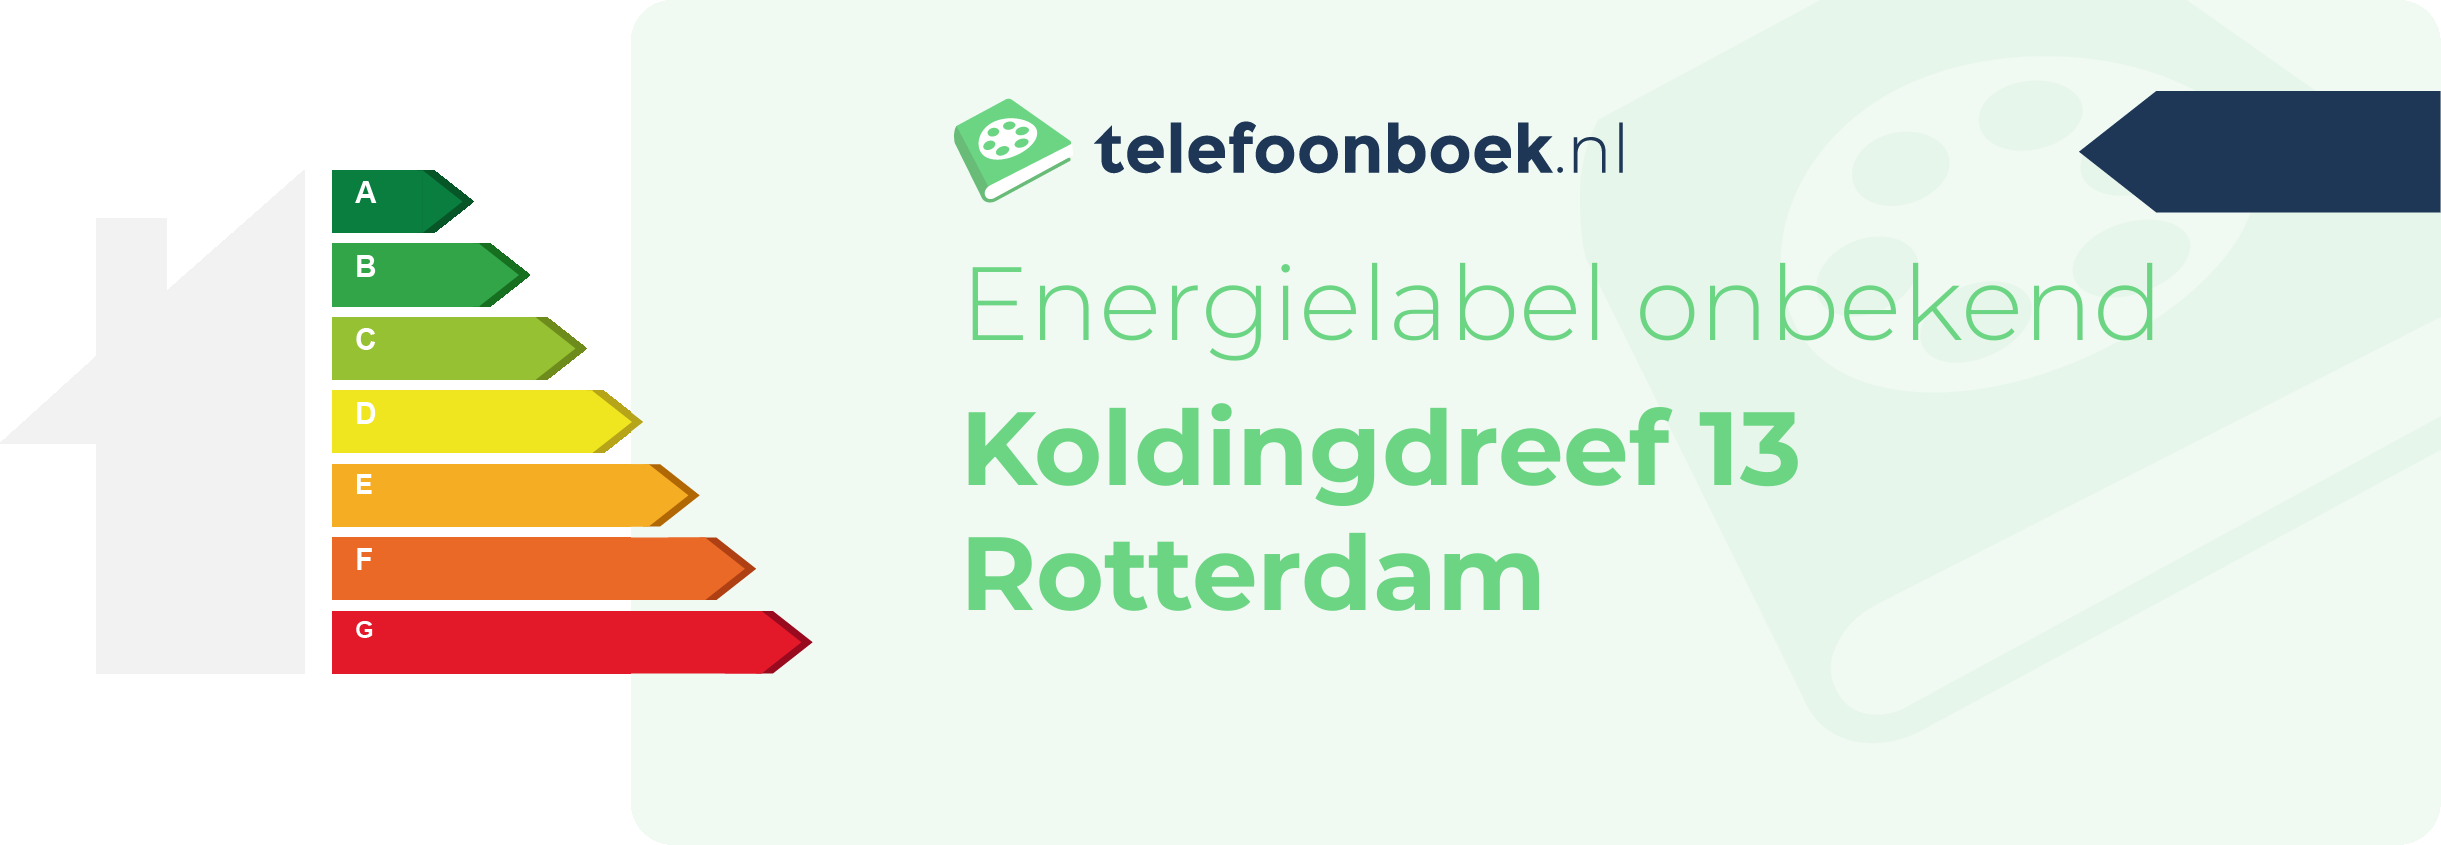 Energielabel Koldingdreef 13 Rotterdam